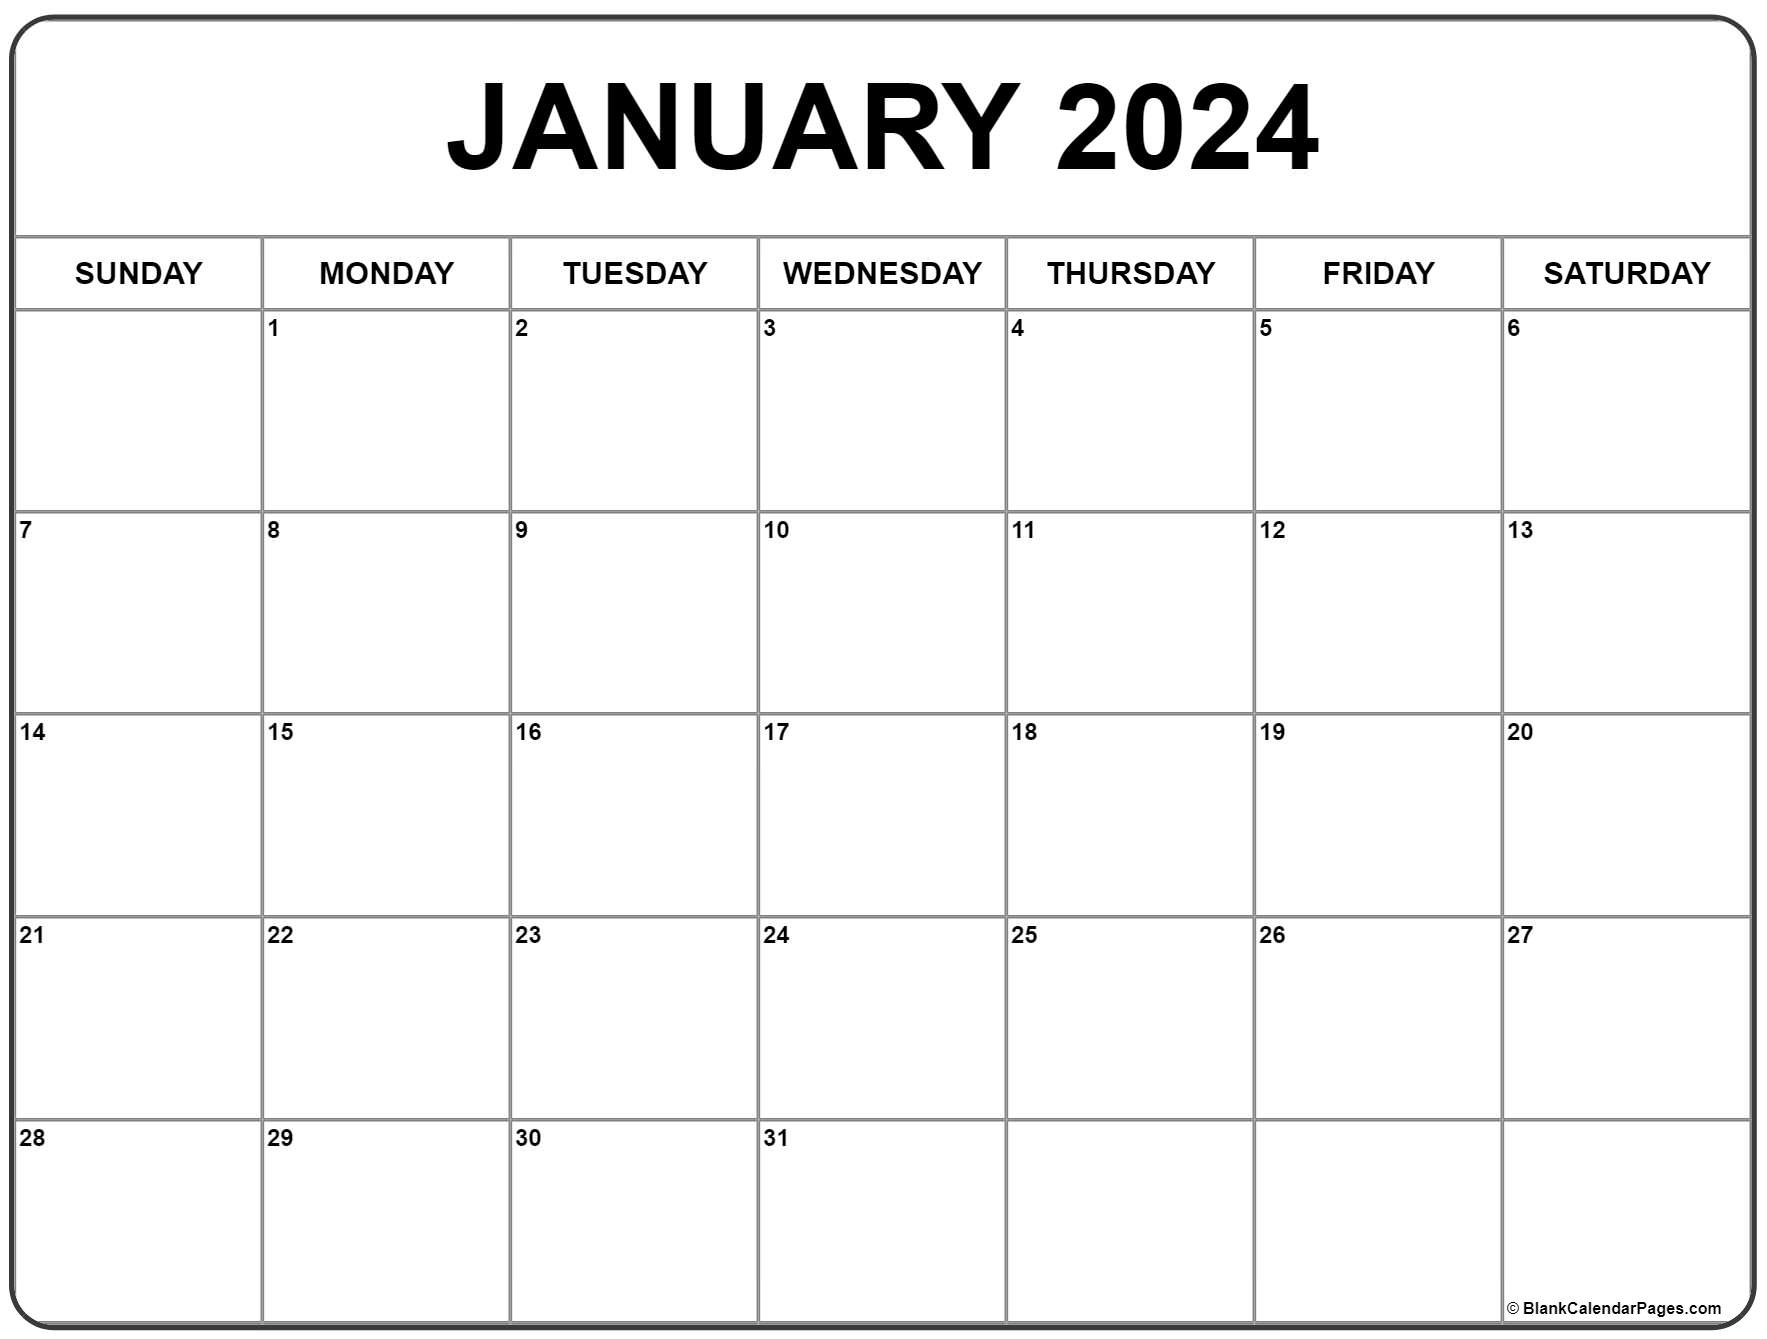 January 2024 Calendar | Free Printable Calendar for Calendar Template January 2024 Printable